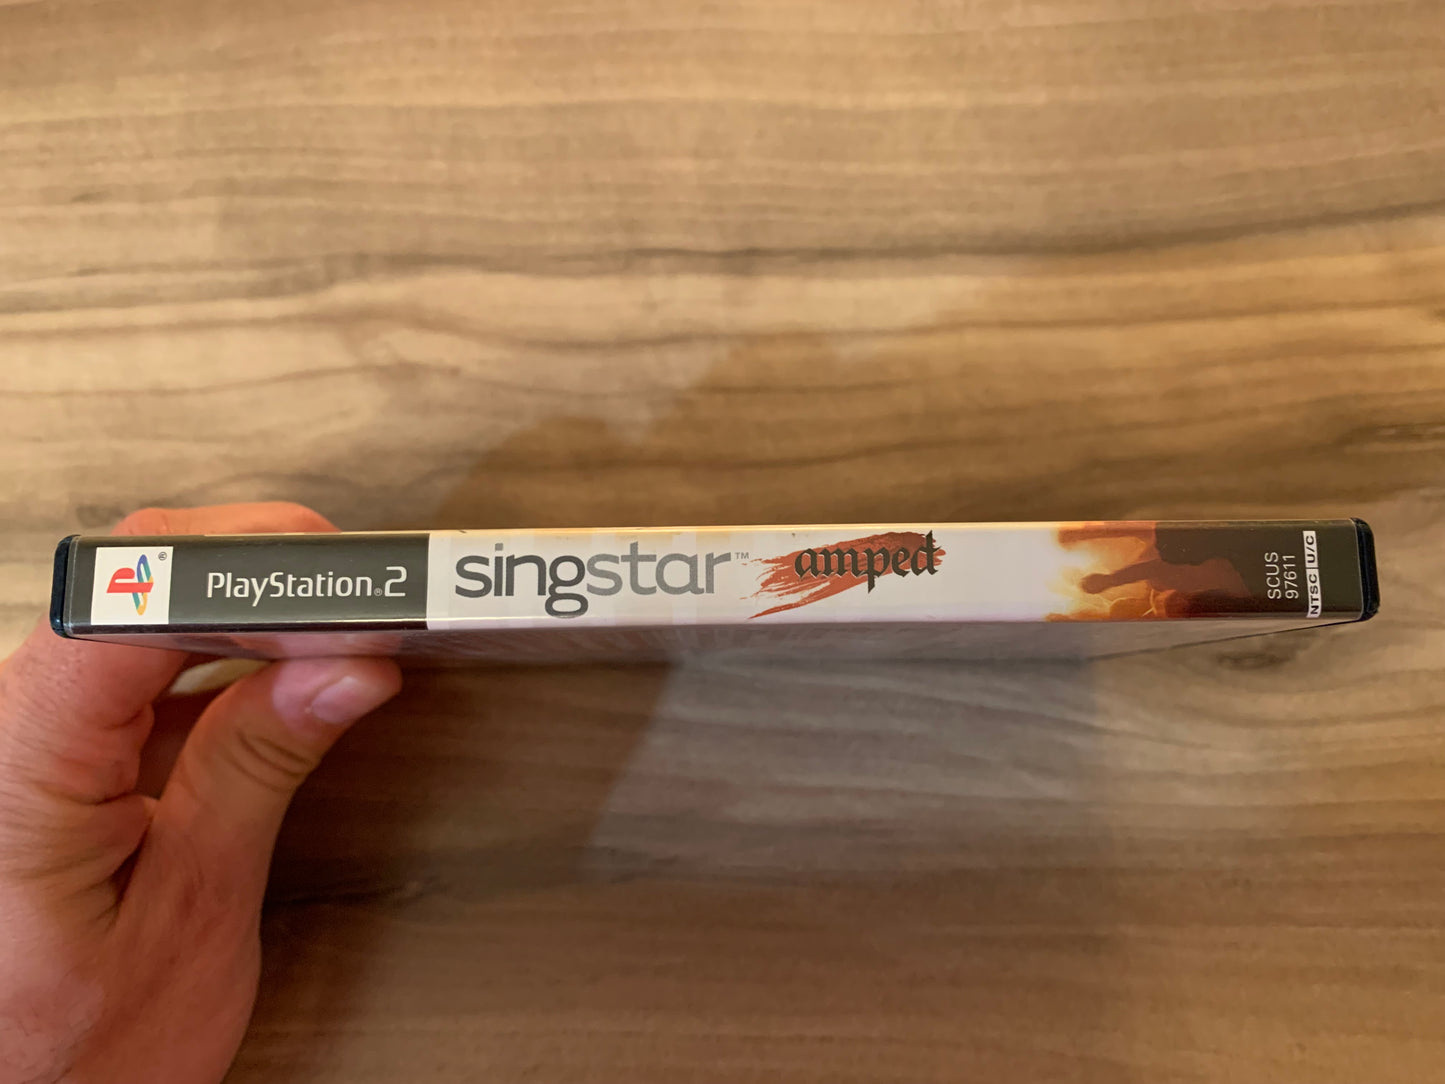 SONY PLAYSTATiON 2 [PS2] | SiNGSTAR AMPED